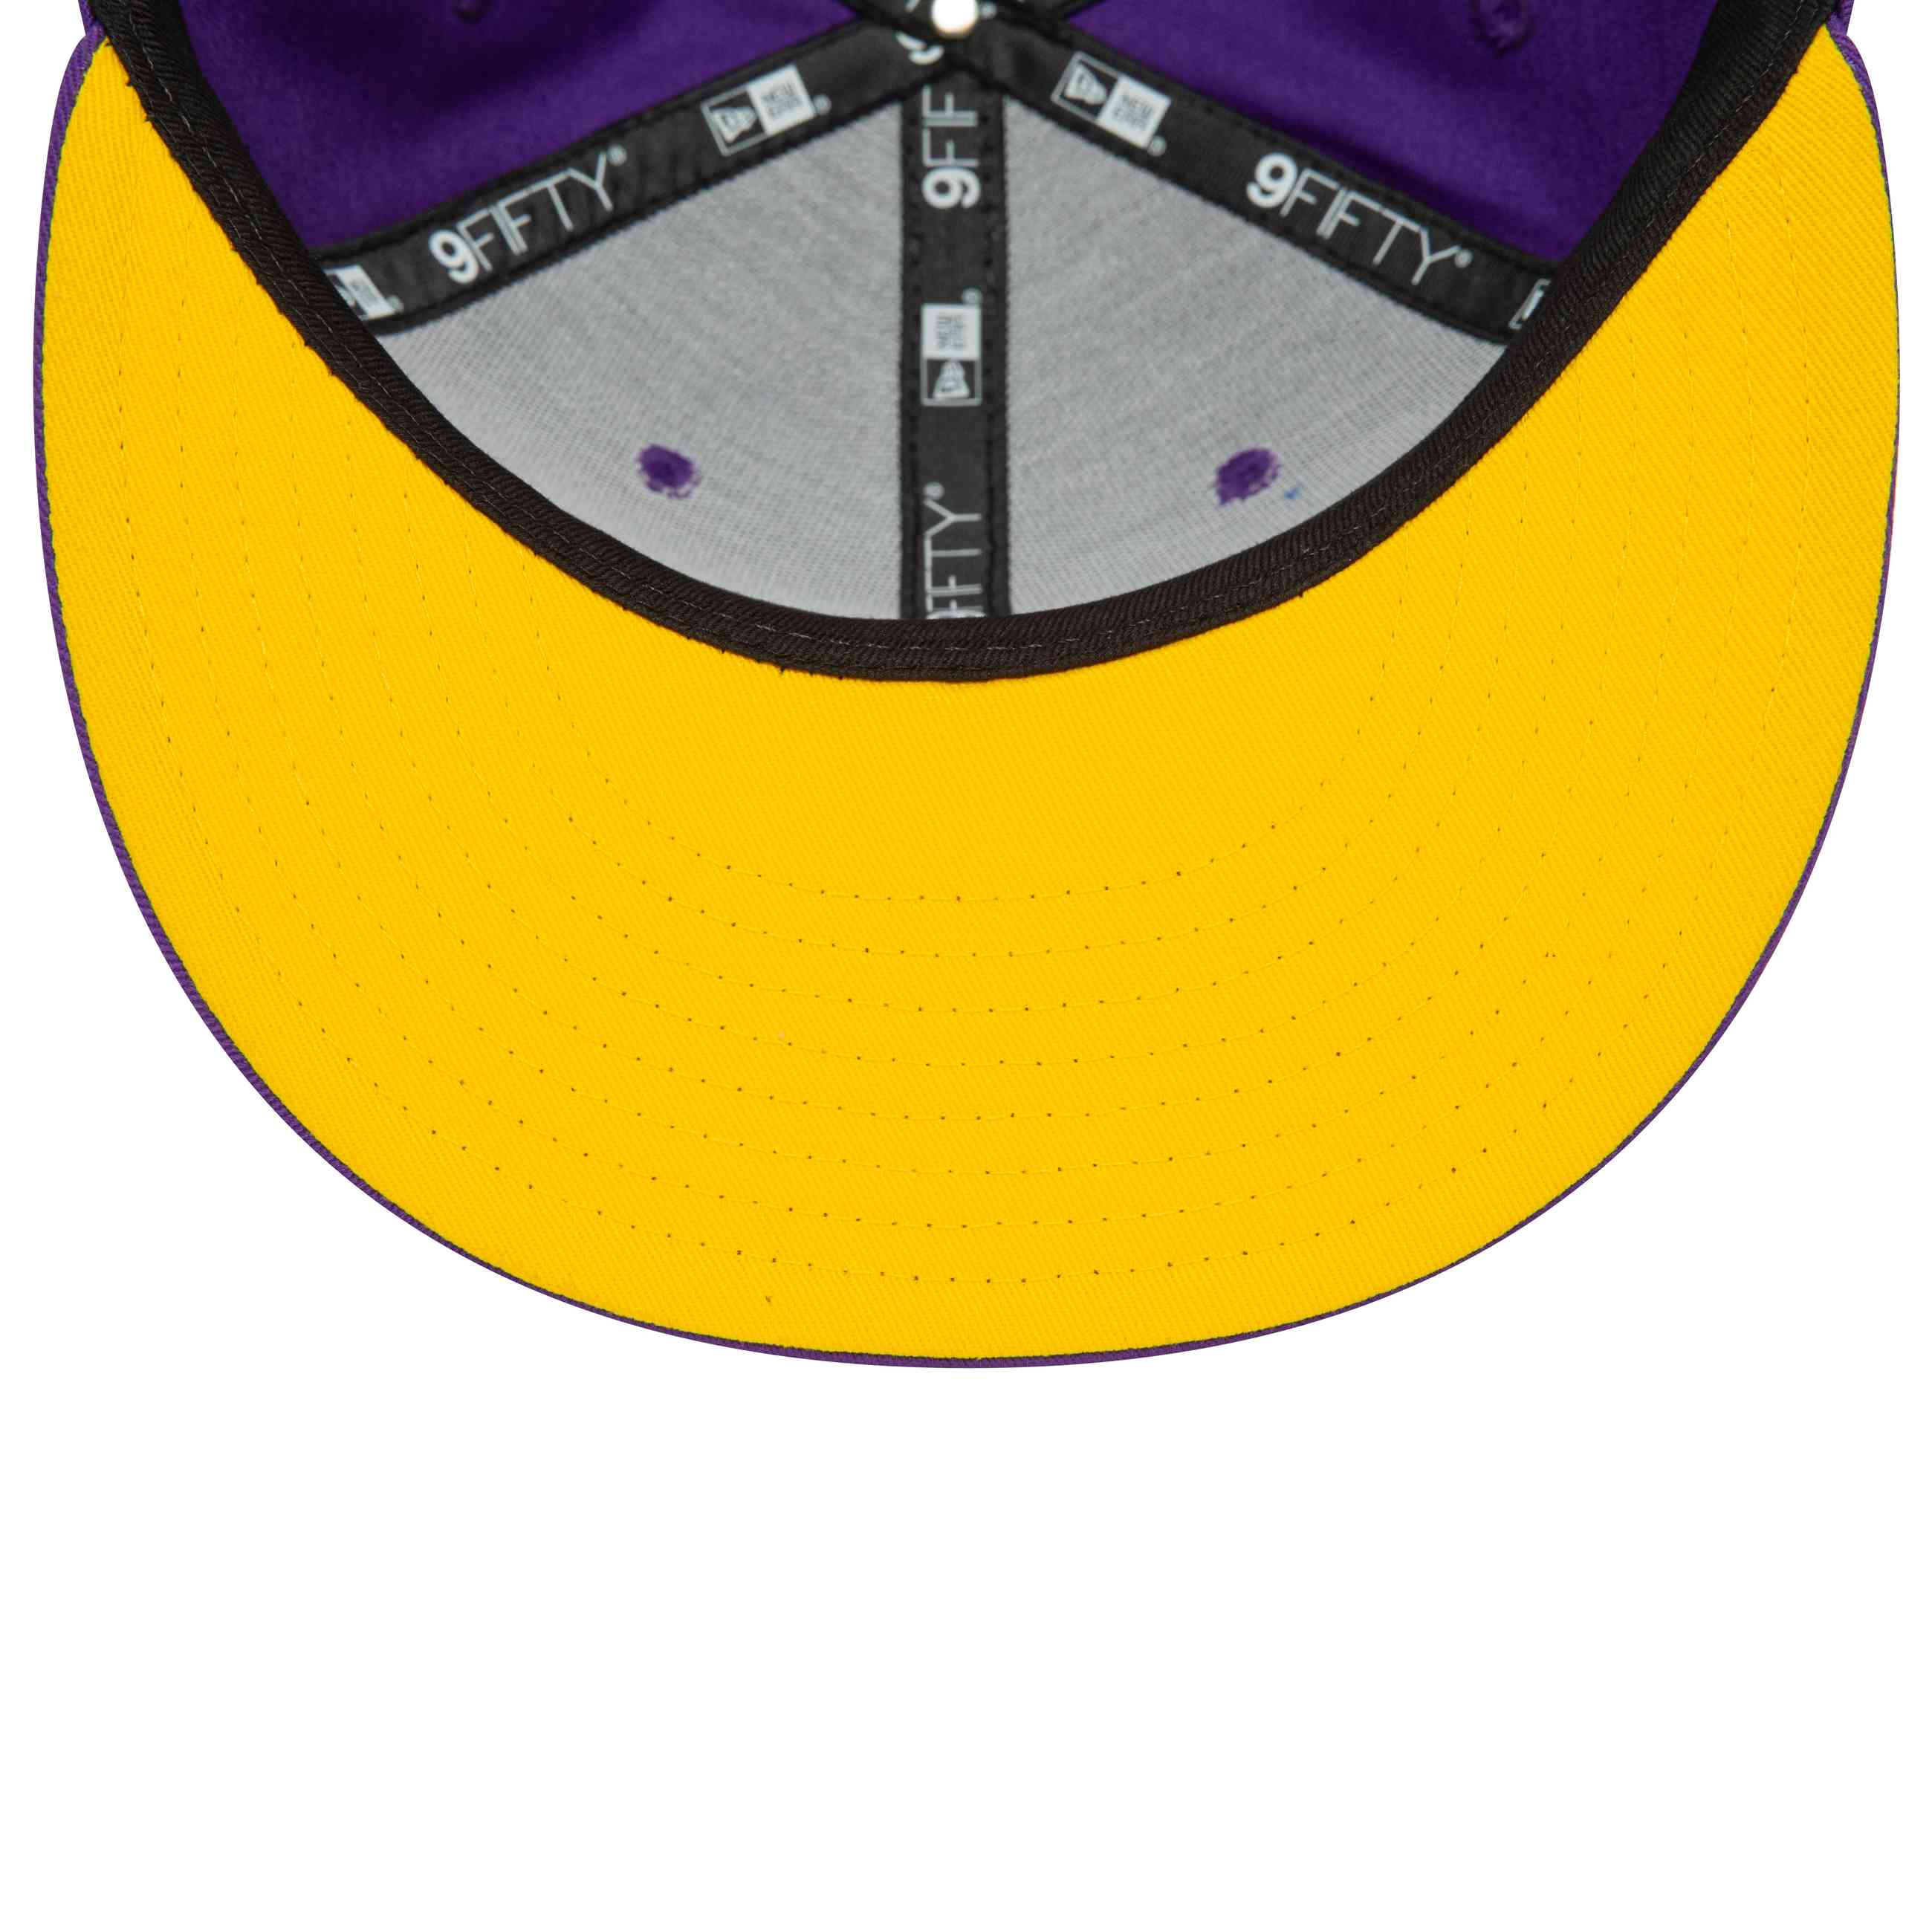 New Era - NBA Los Angeles Lakers Rear Logo 9Fifty Snapback Cap